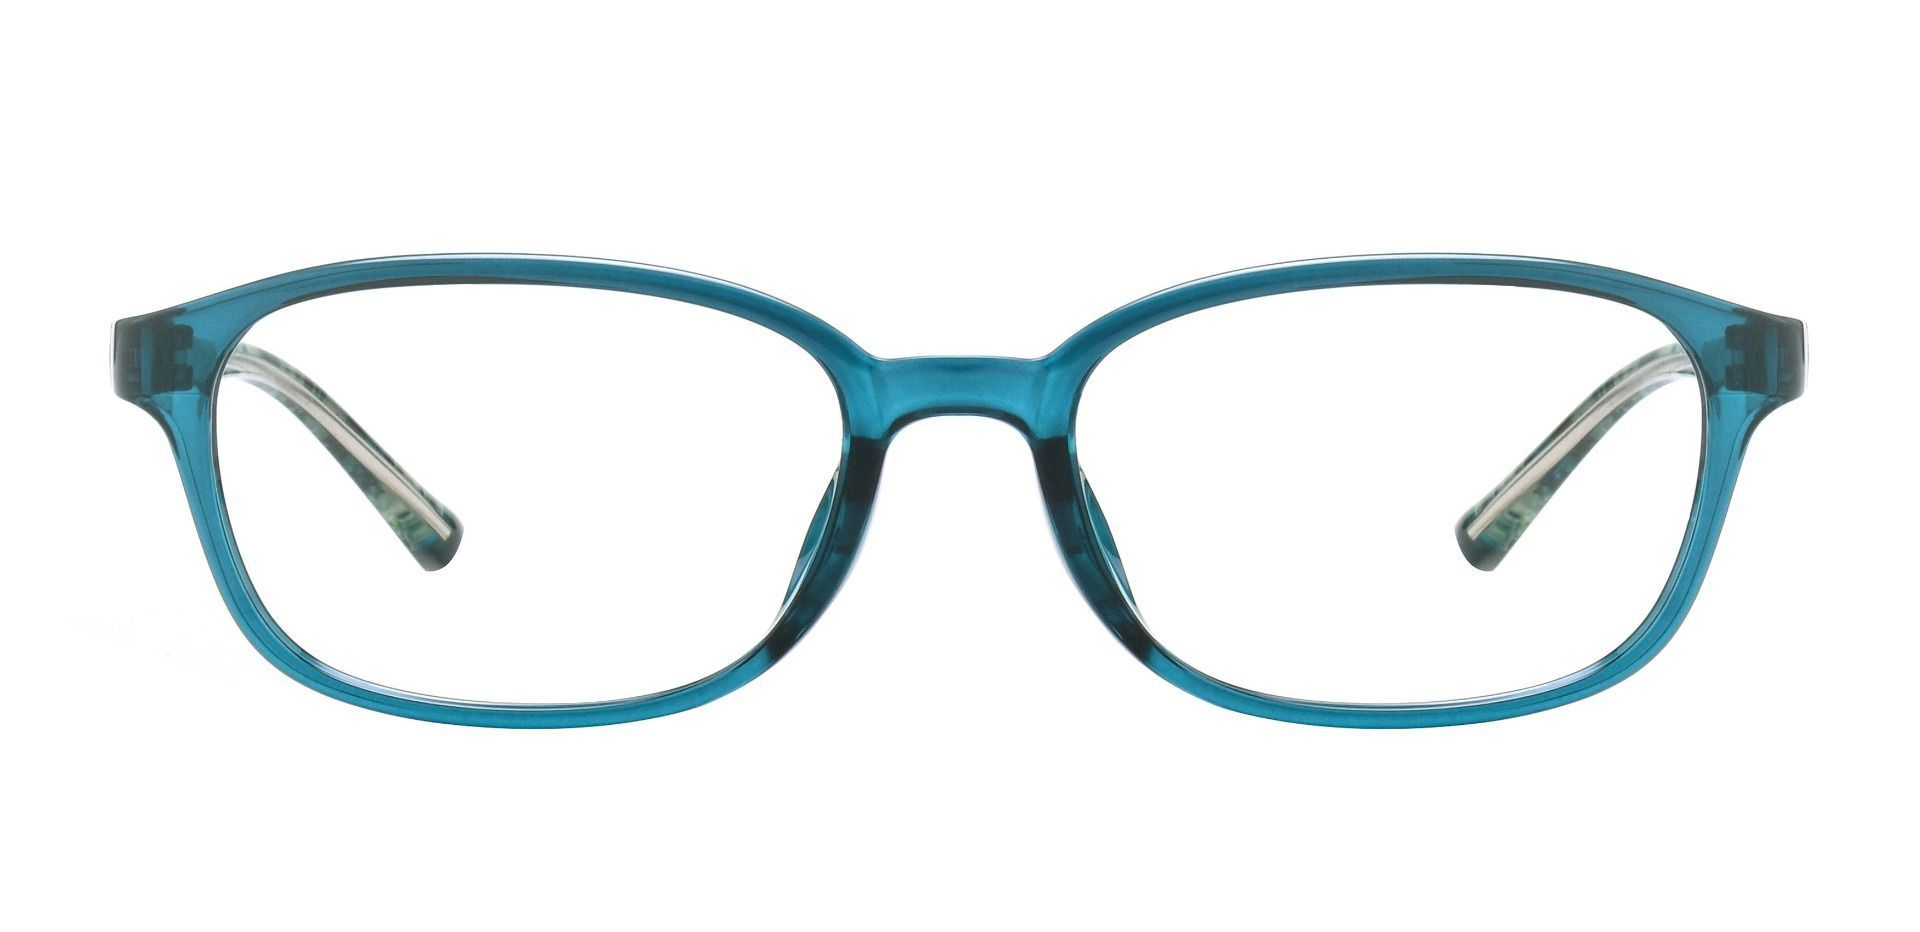 Hemingway Oval Reading Glasses - Blue